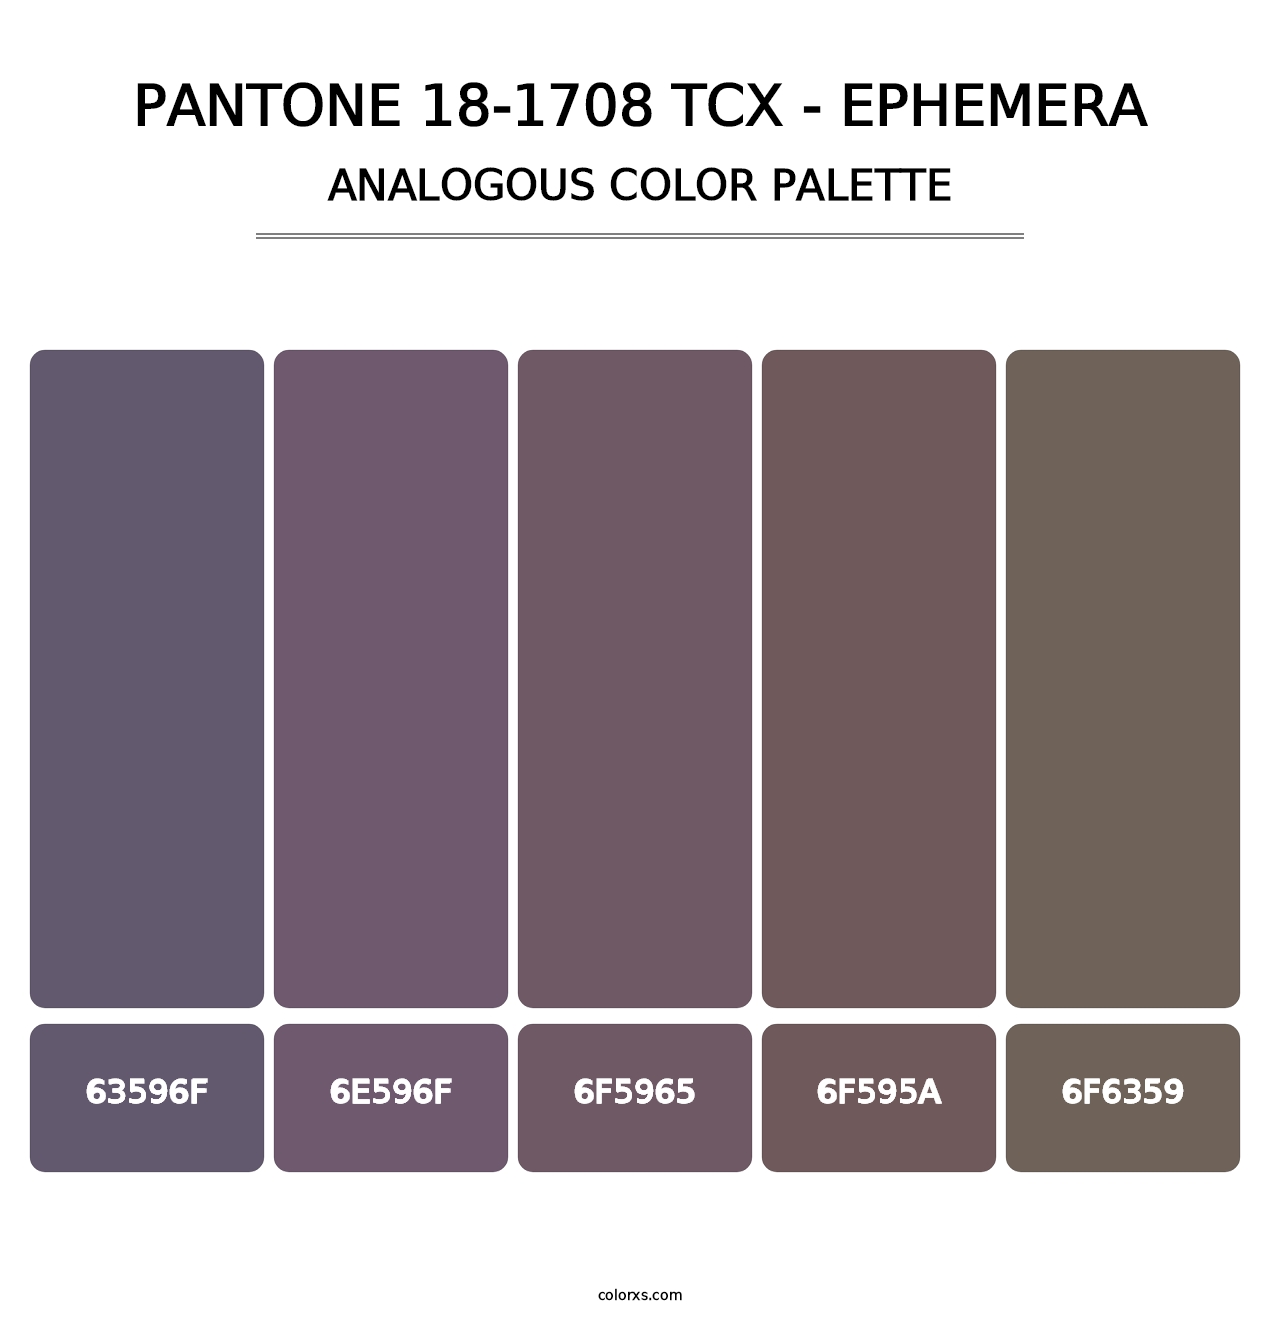 PANTONE 18-1708 TCX - Ephemera - Analogous Color Palette